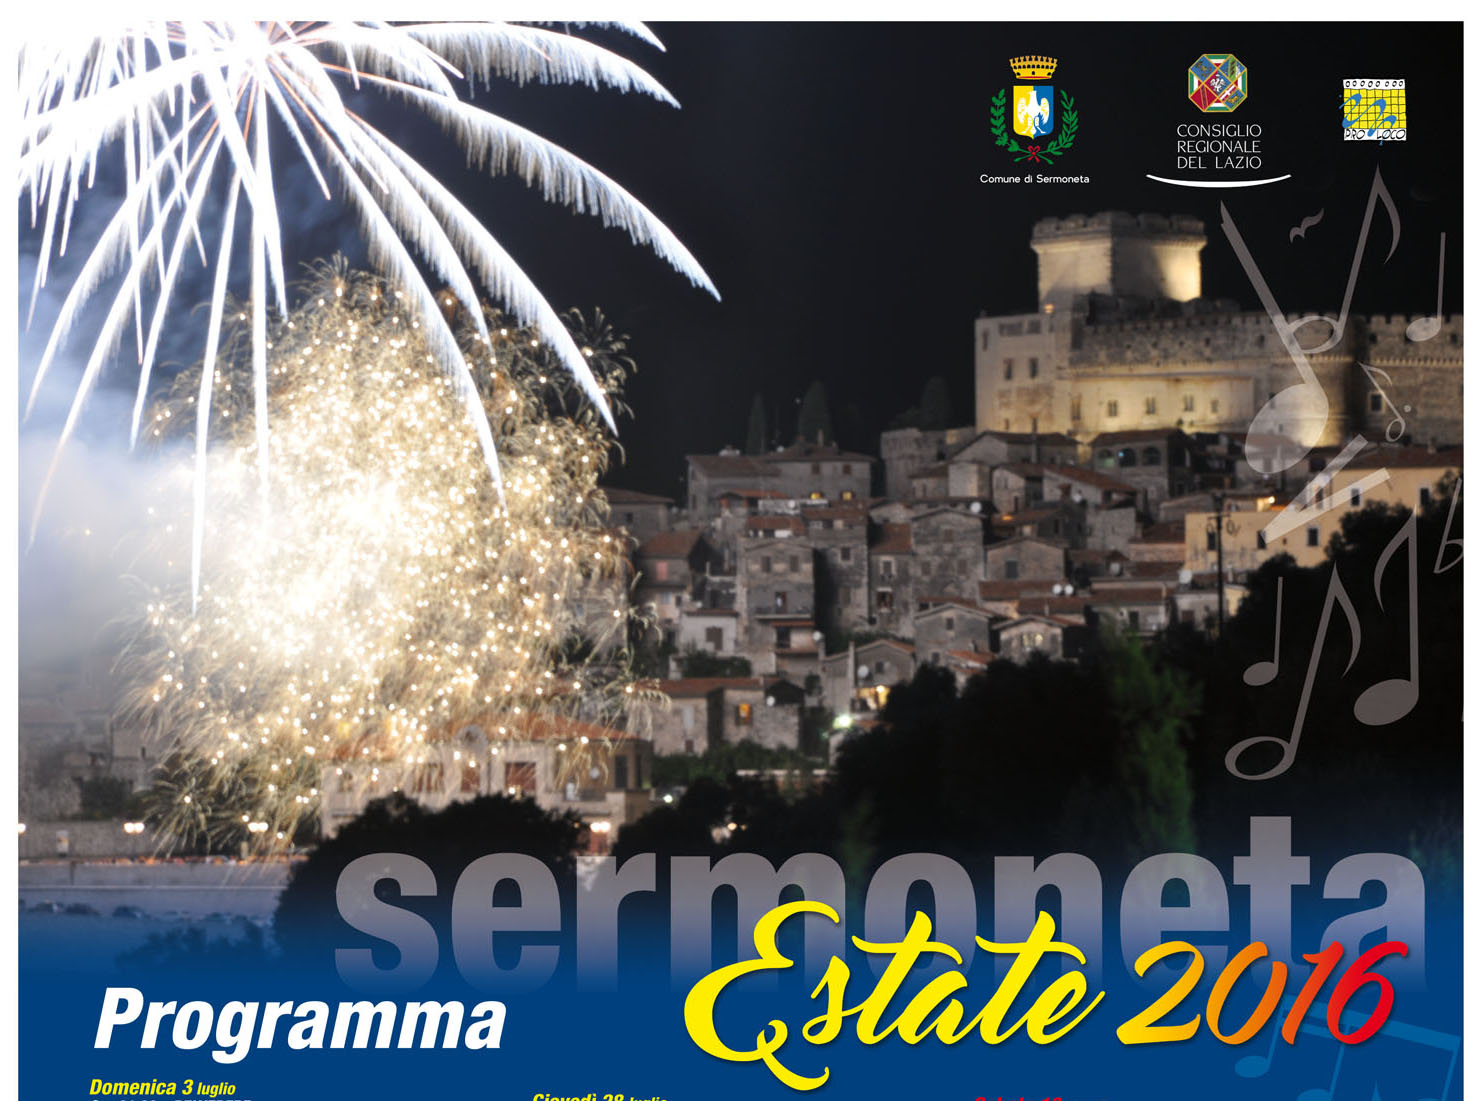 Sermoneta Estate 2016: teatro, musica, Folklore, Arte